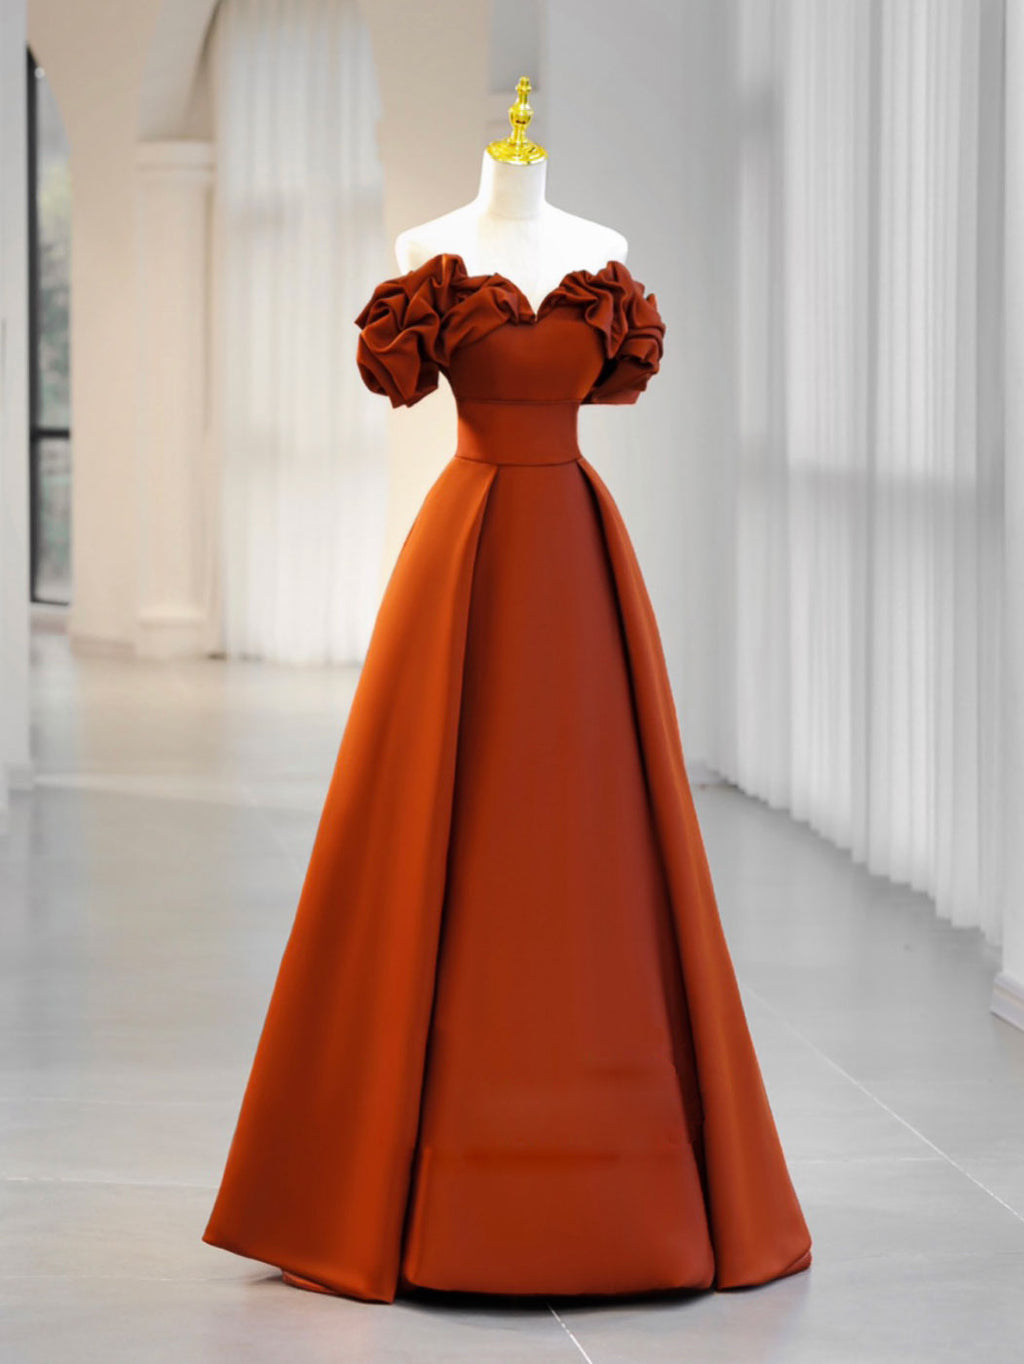 What to Wear with Orange Dress - The Kisha Project